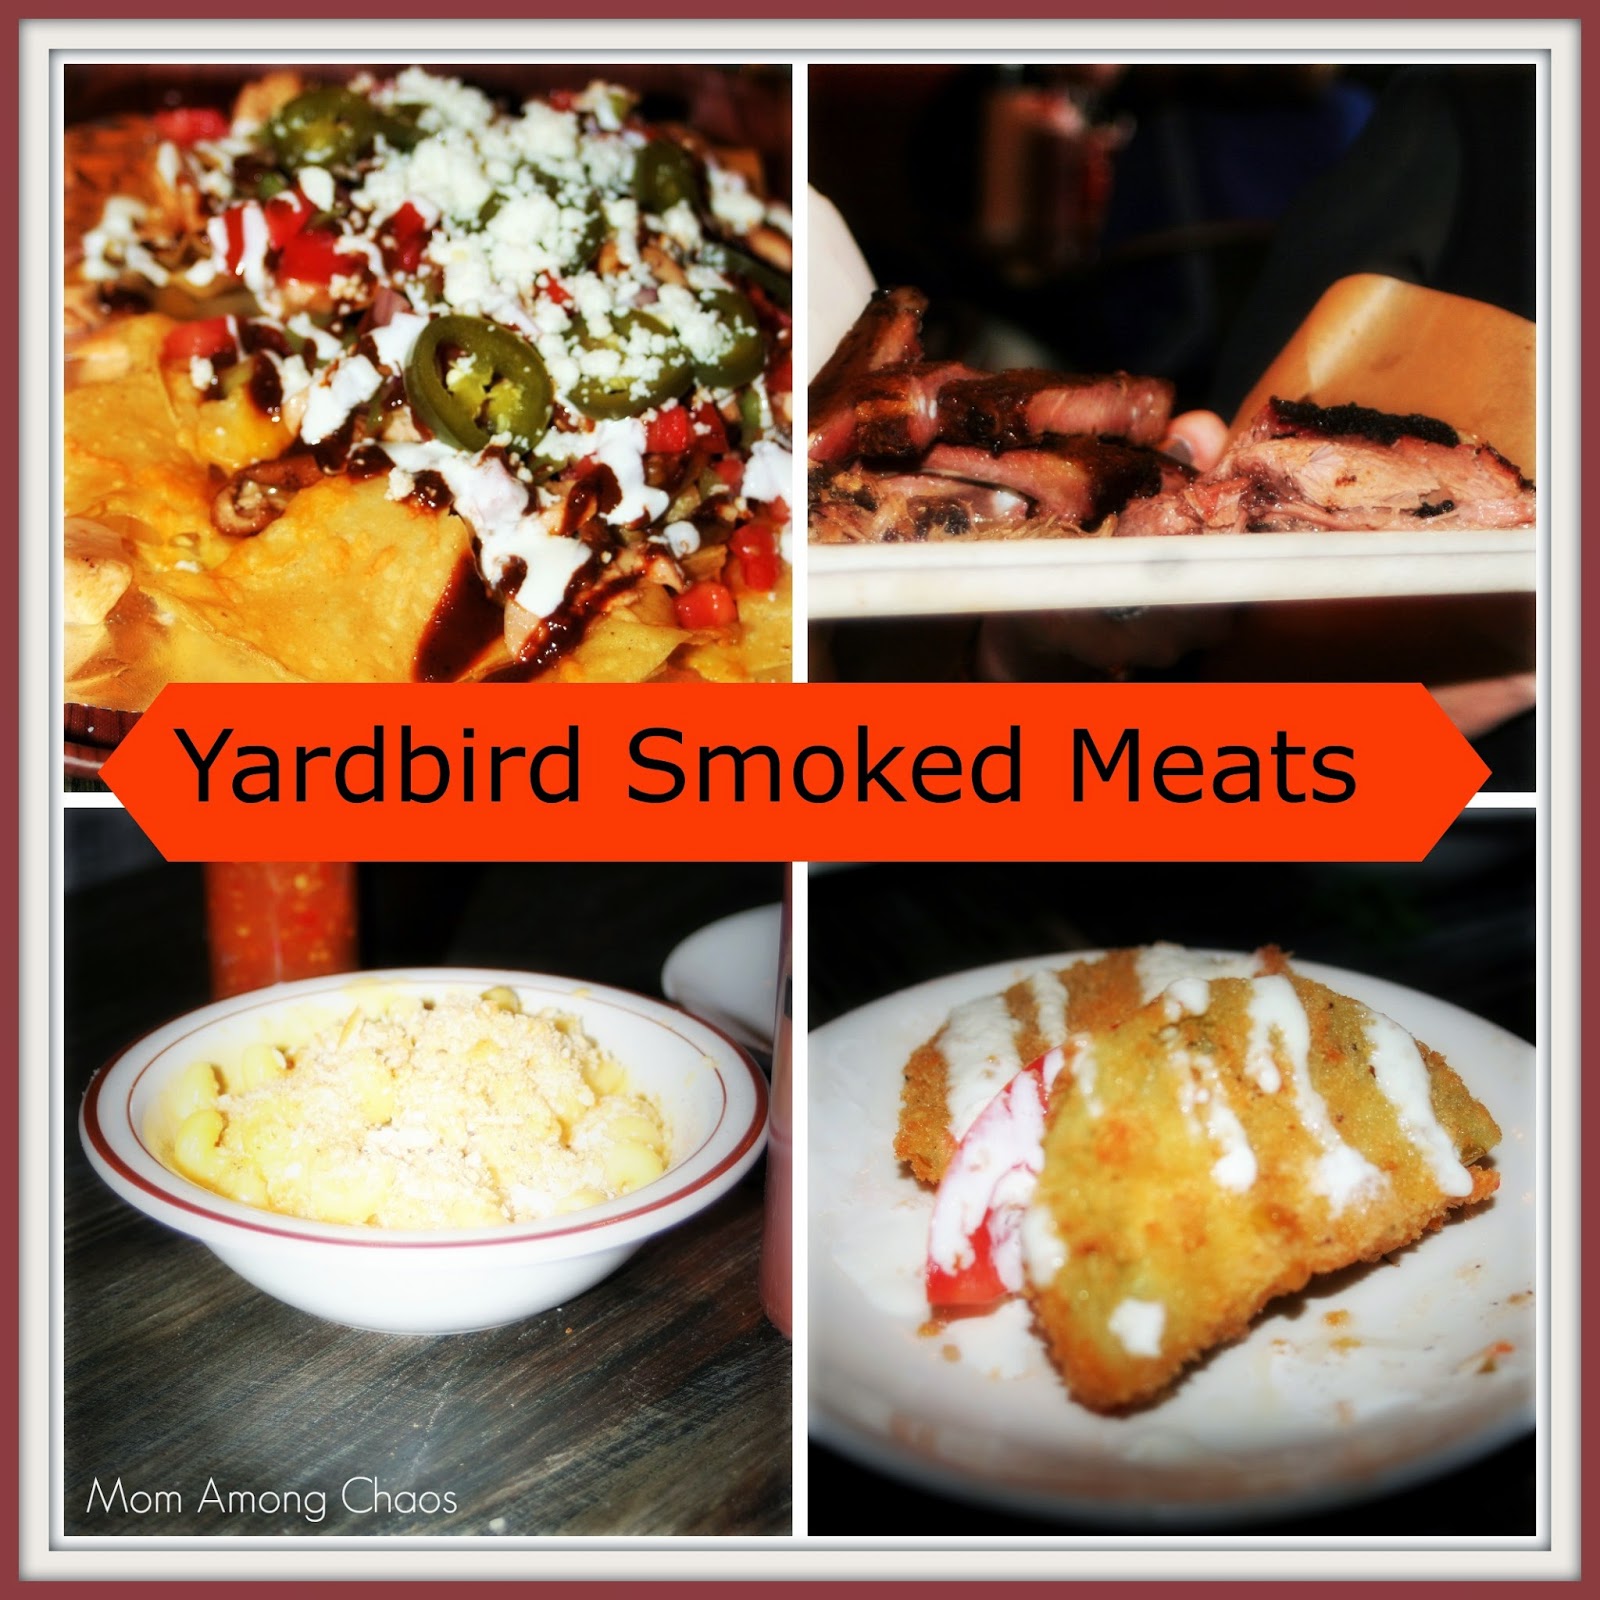 Yardbird Smoked Meats, BBQ, food, blogger, #Yardbirdcool, mac and cheese, restaurant